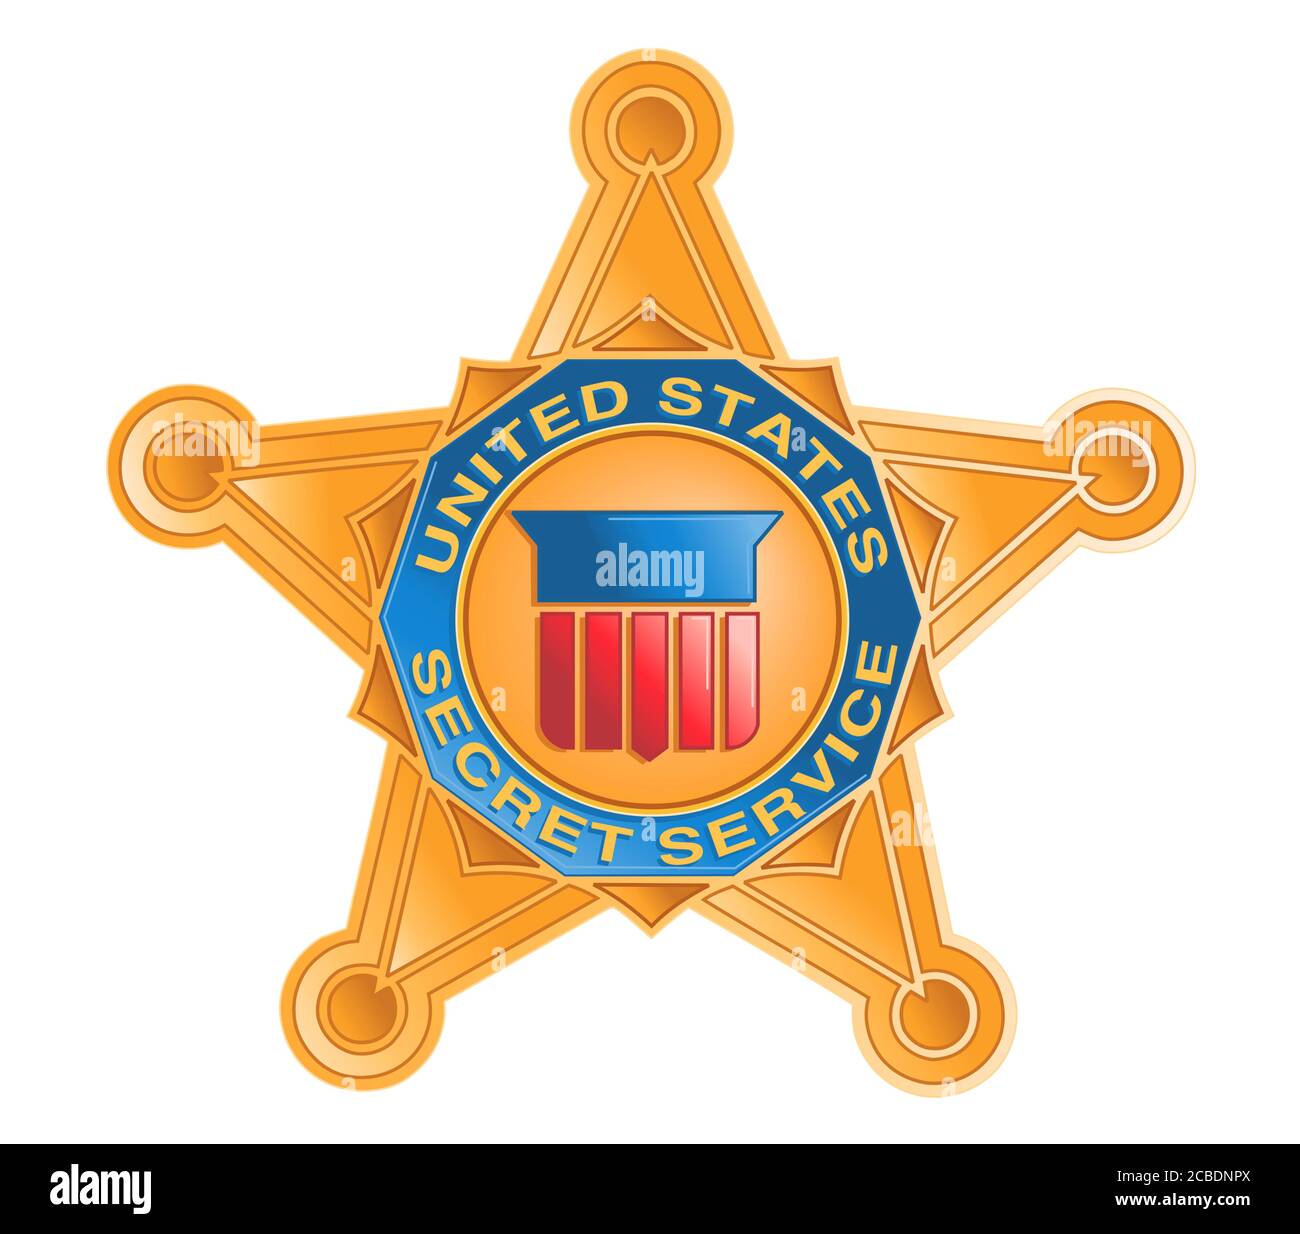 United States Secret Service Stock Photo